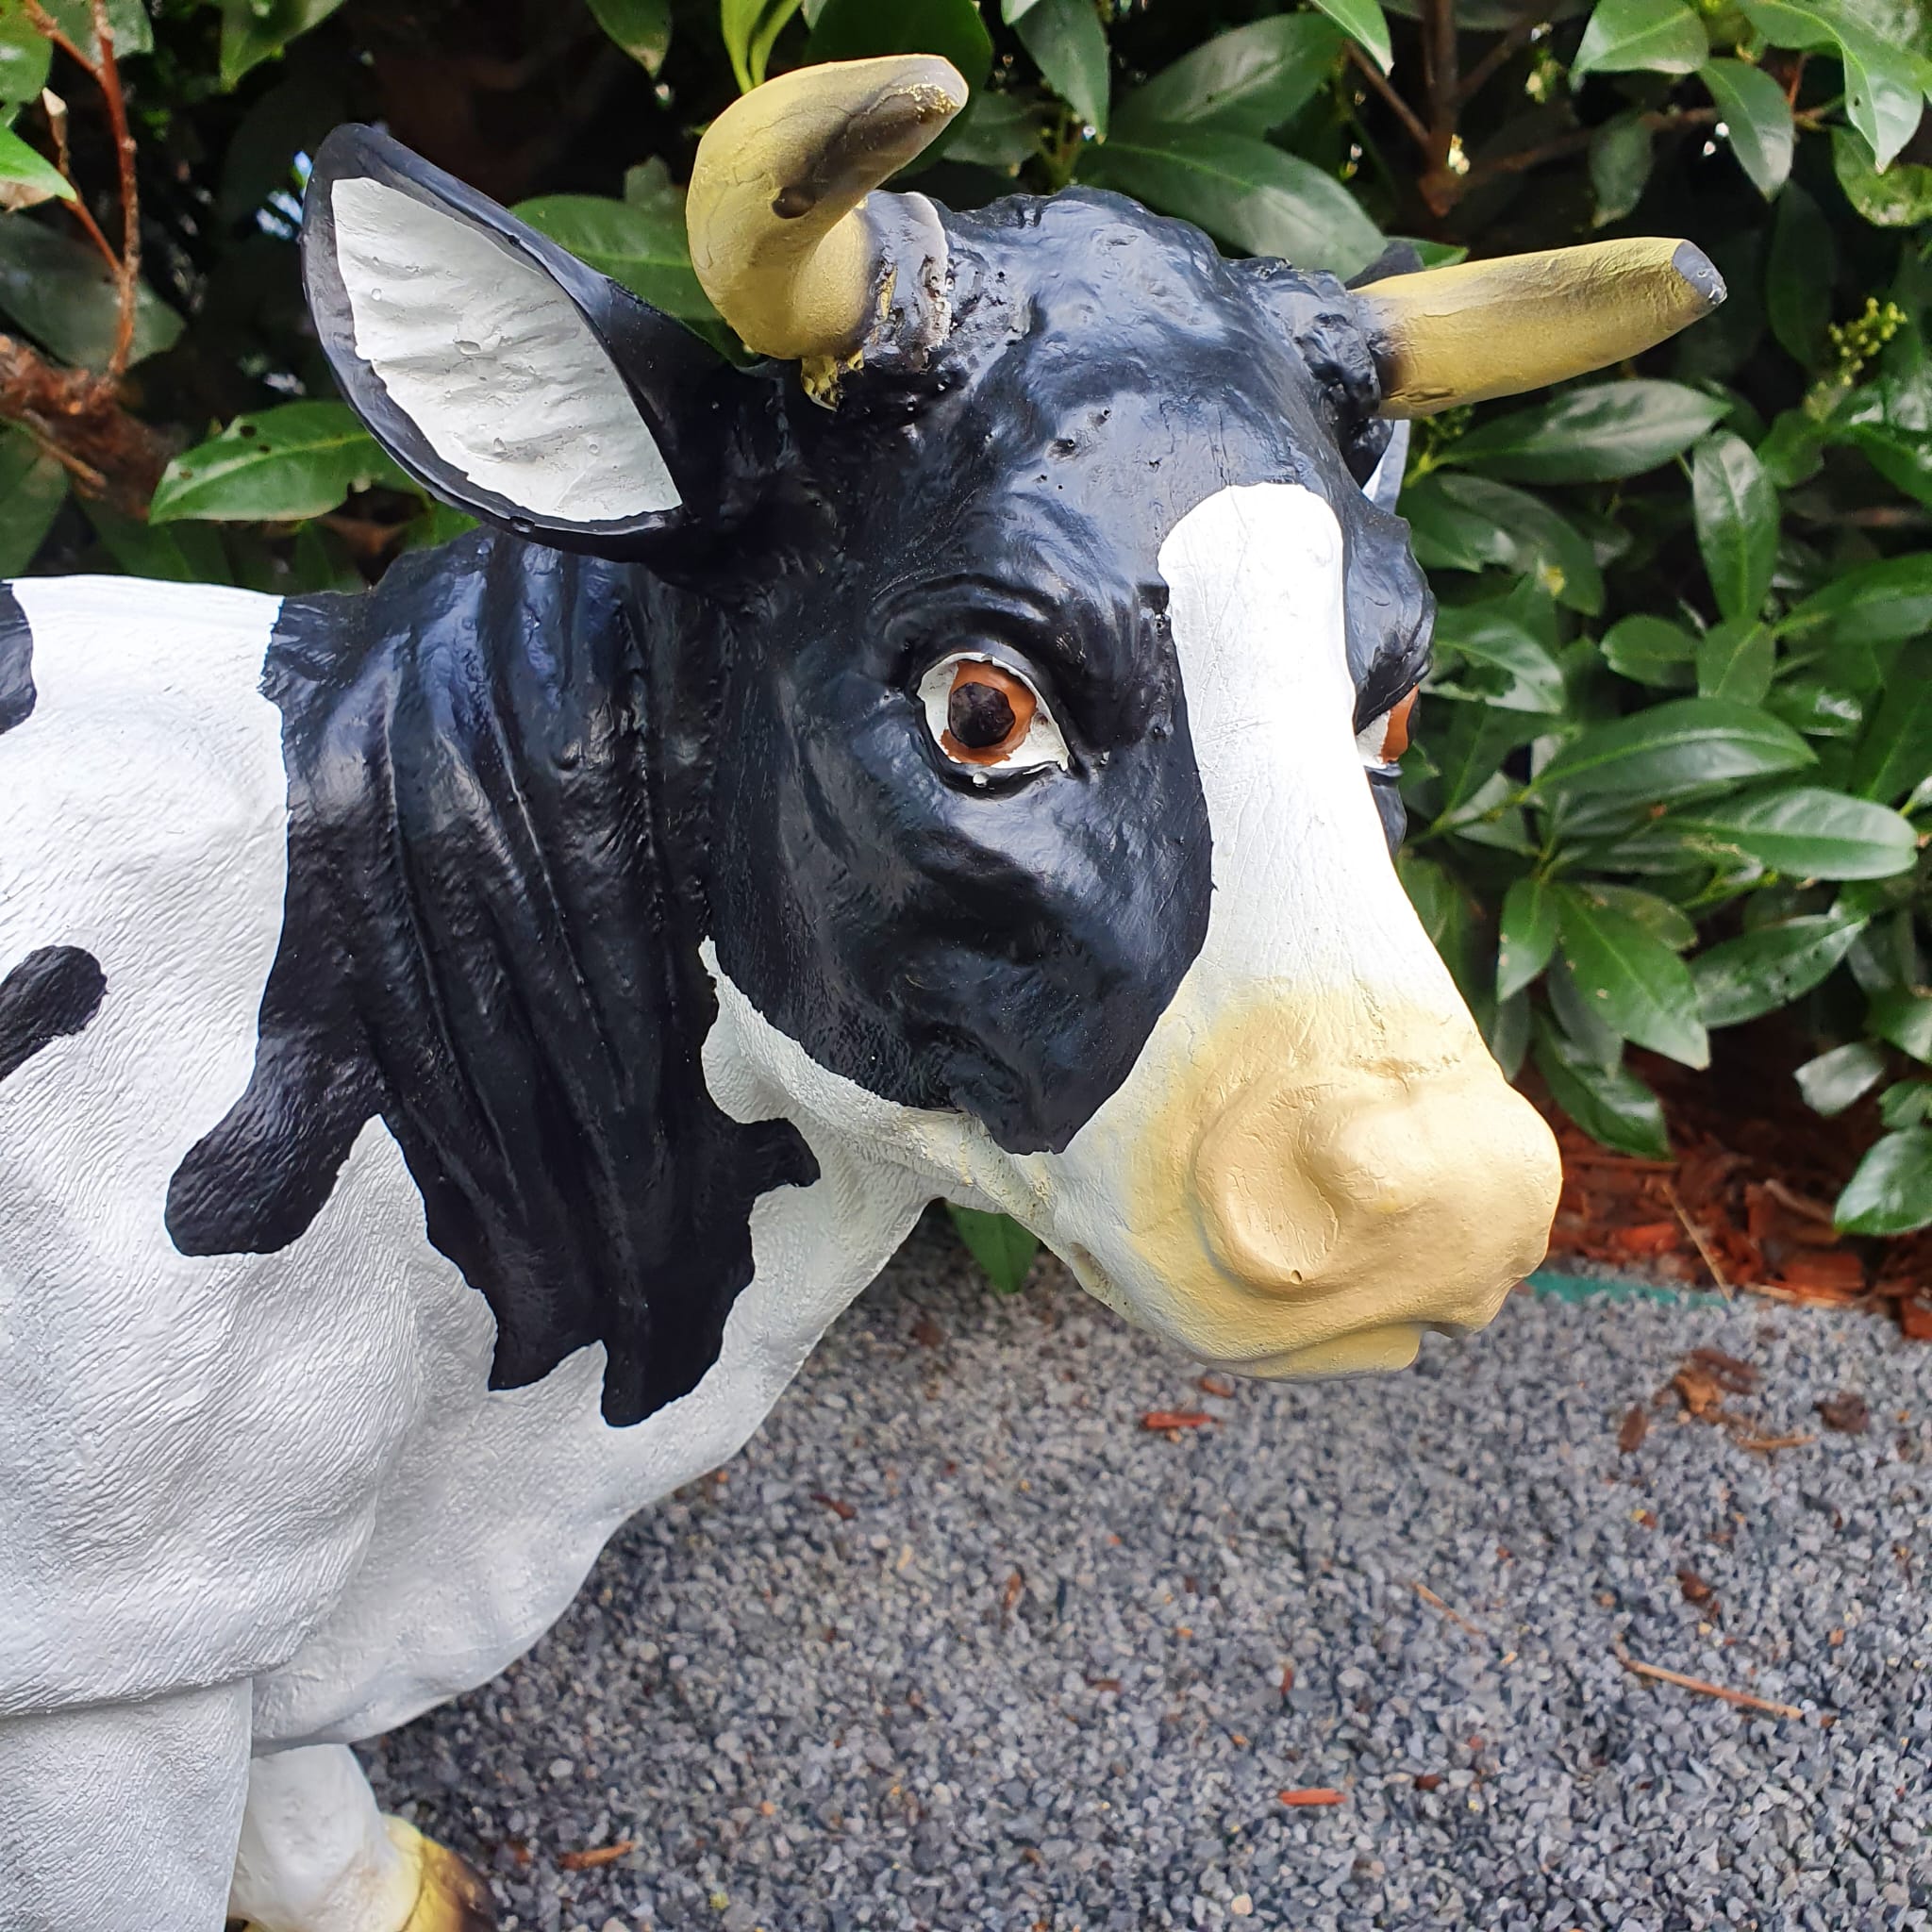 Gartenfigur schwarz weiße Kuh Figur 60 cm lang